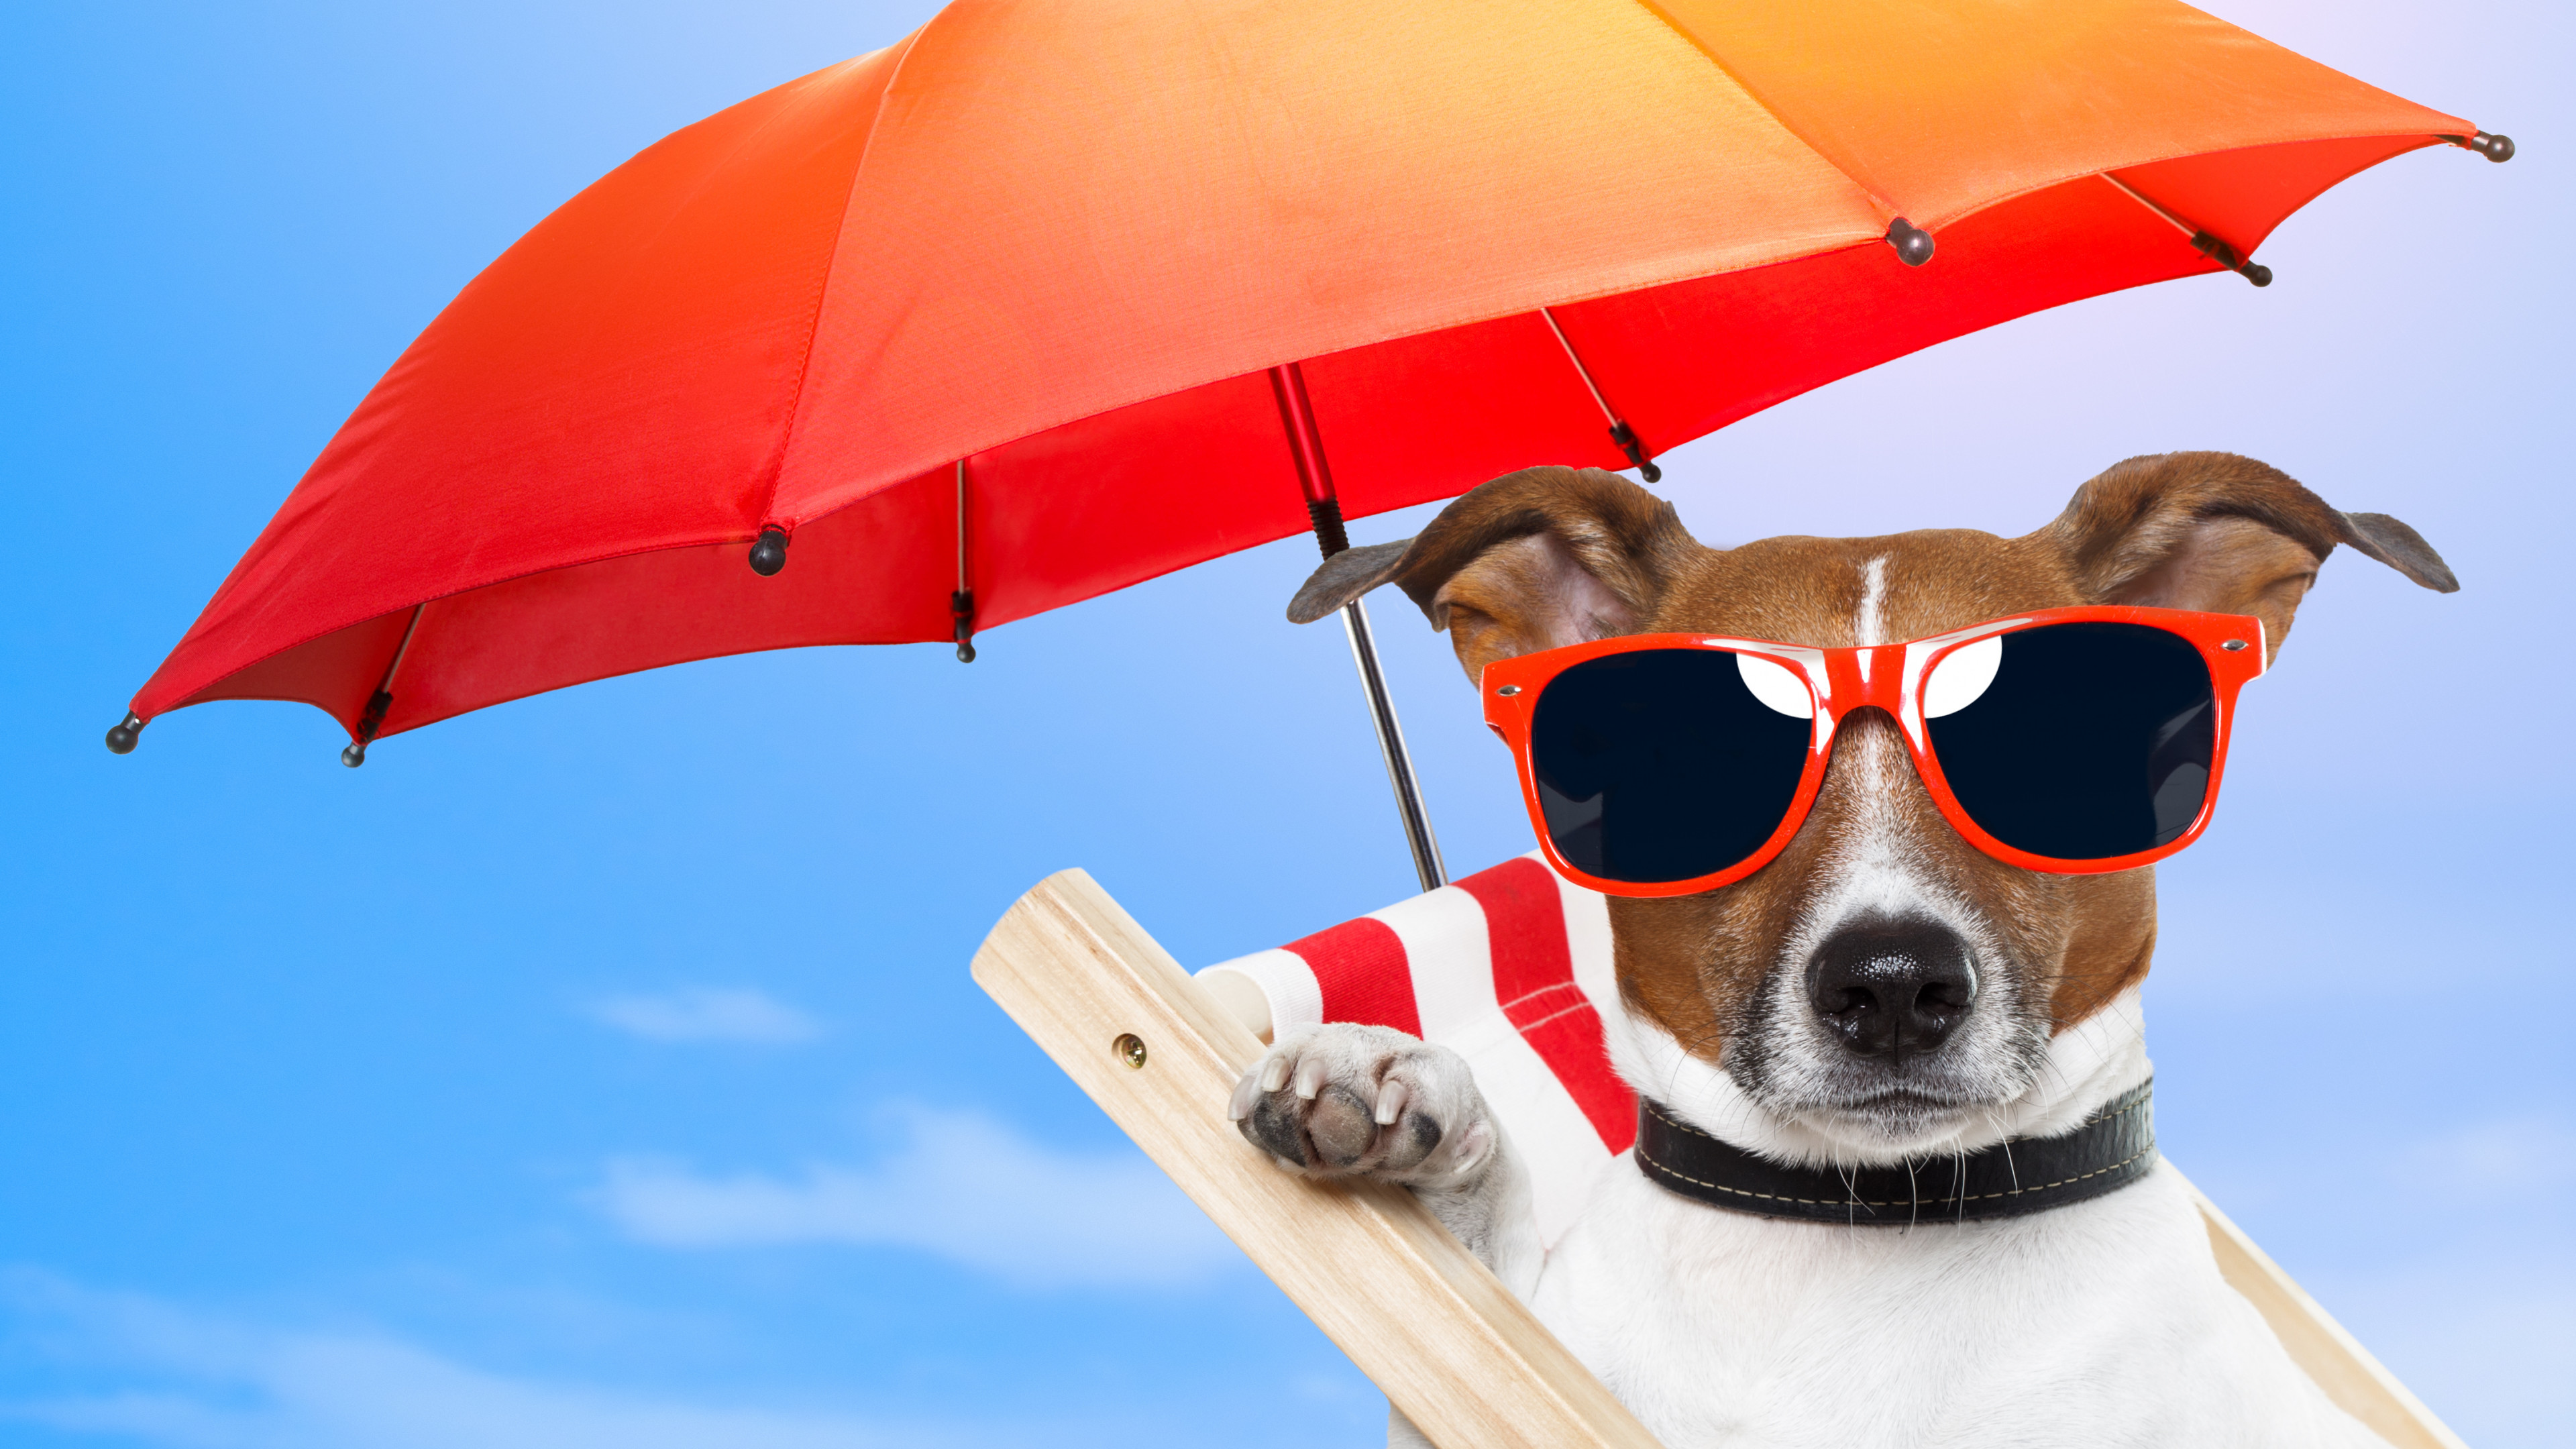 Wallpaper Dog, 5k, 4k wallpaper, 8k, puppy, sun, summer, beach, sunglasses,  umbrella, vacation, animal, pet, sky, OS #1537